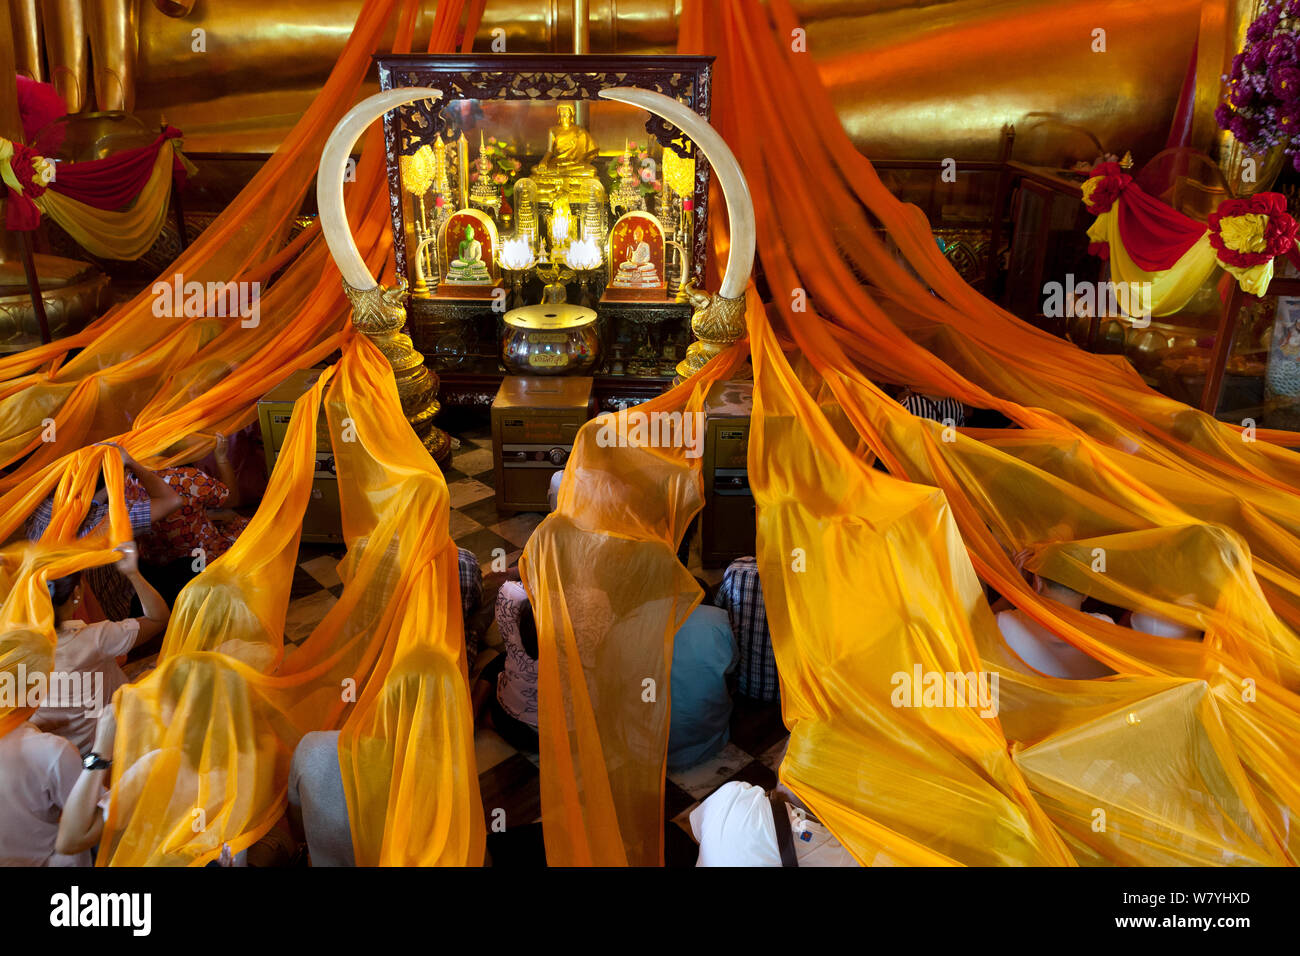 Ceremony adorning golden statue of the Buddha in yellow sashes,  Wat Phanan Choeng, Ayutthaya. Thailand, September 2014. Stock Photo